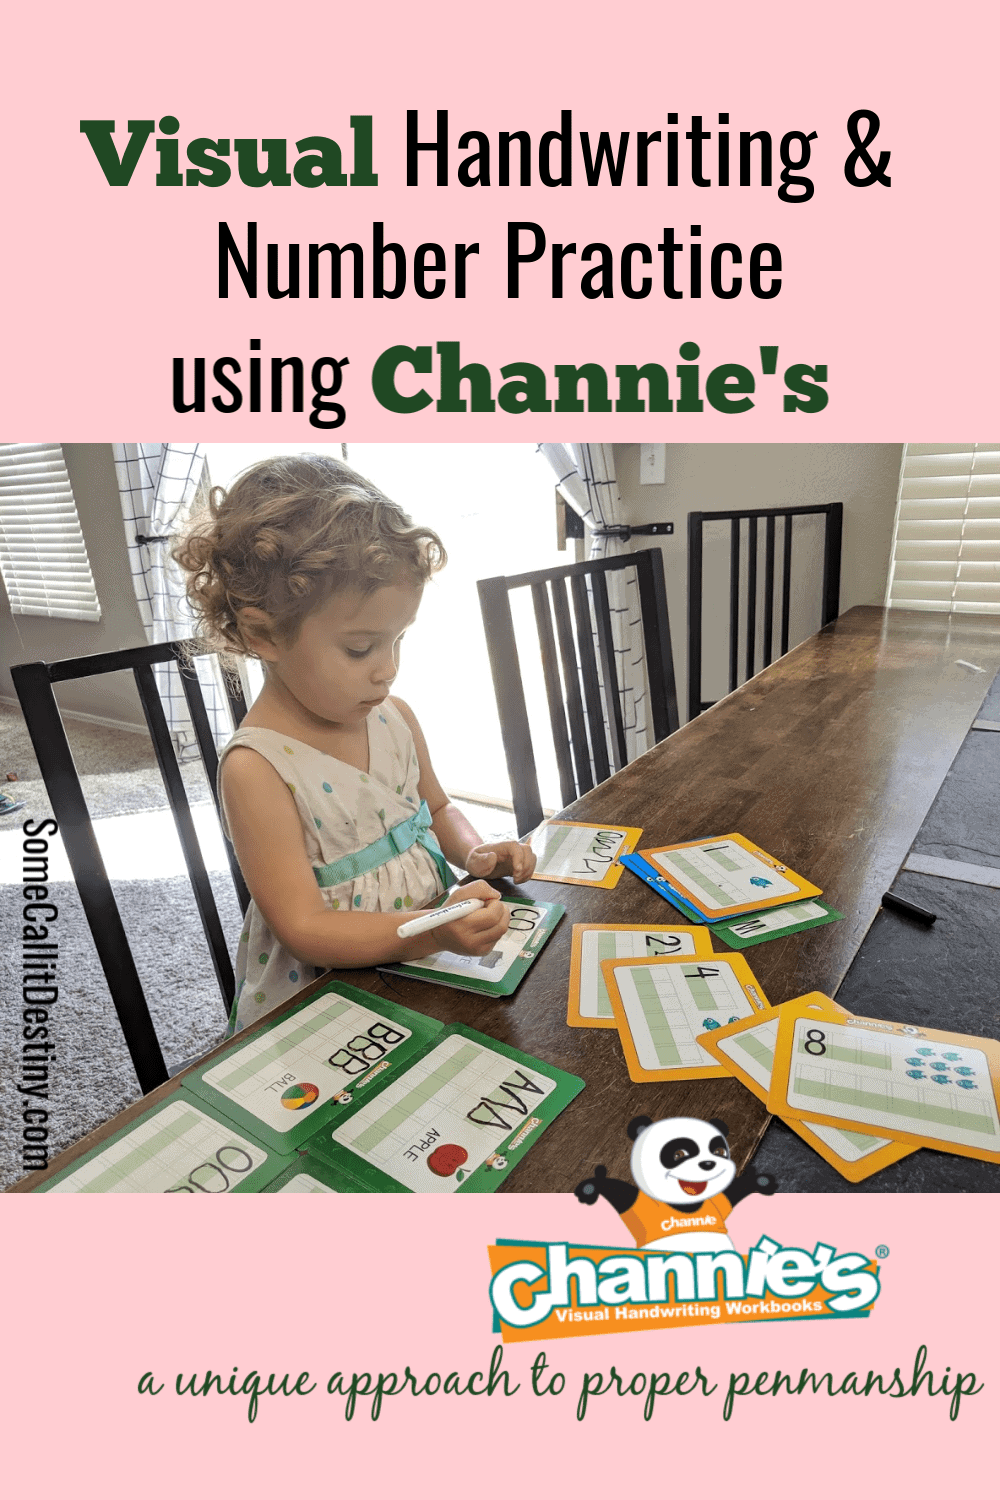 Channie's Visual Handwriting & Math workbooks